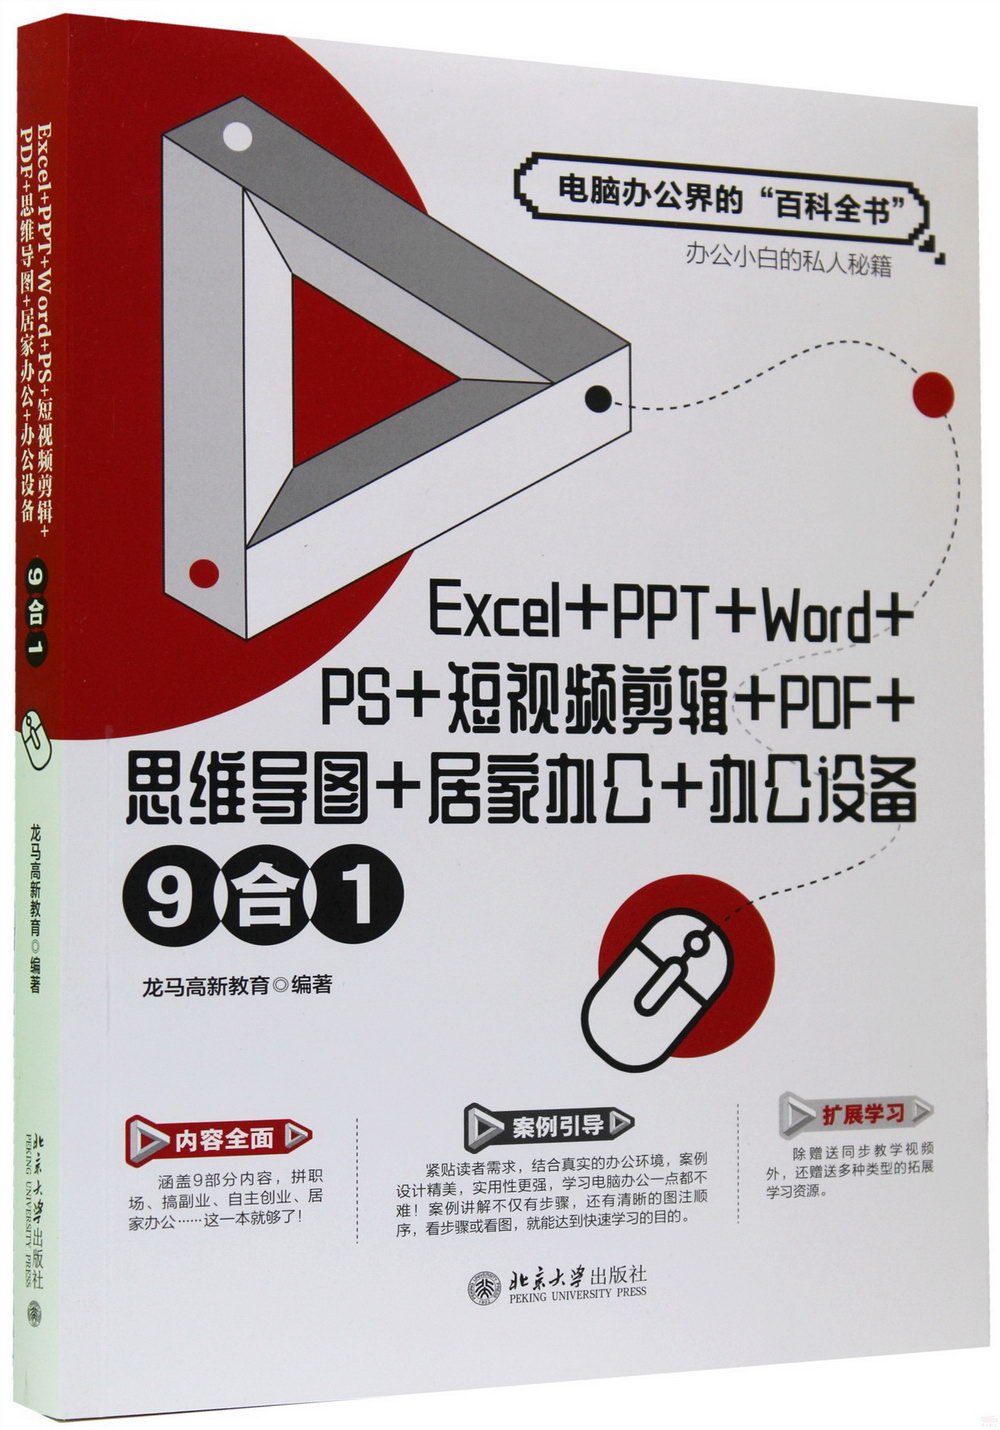 Excel+PPT+Word+PS+短視頻剪輯+PDF+思維導圖+居家辦公+辦公設備9合1